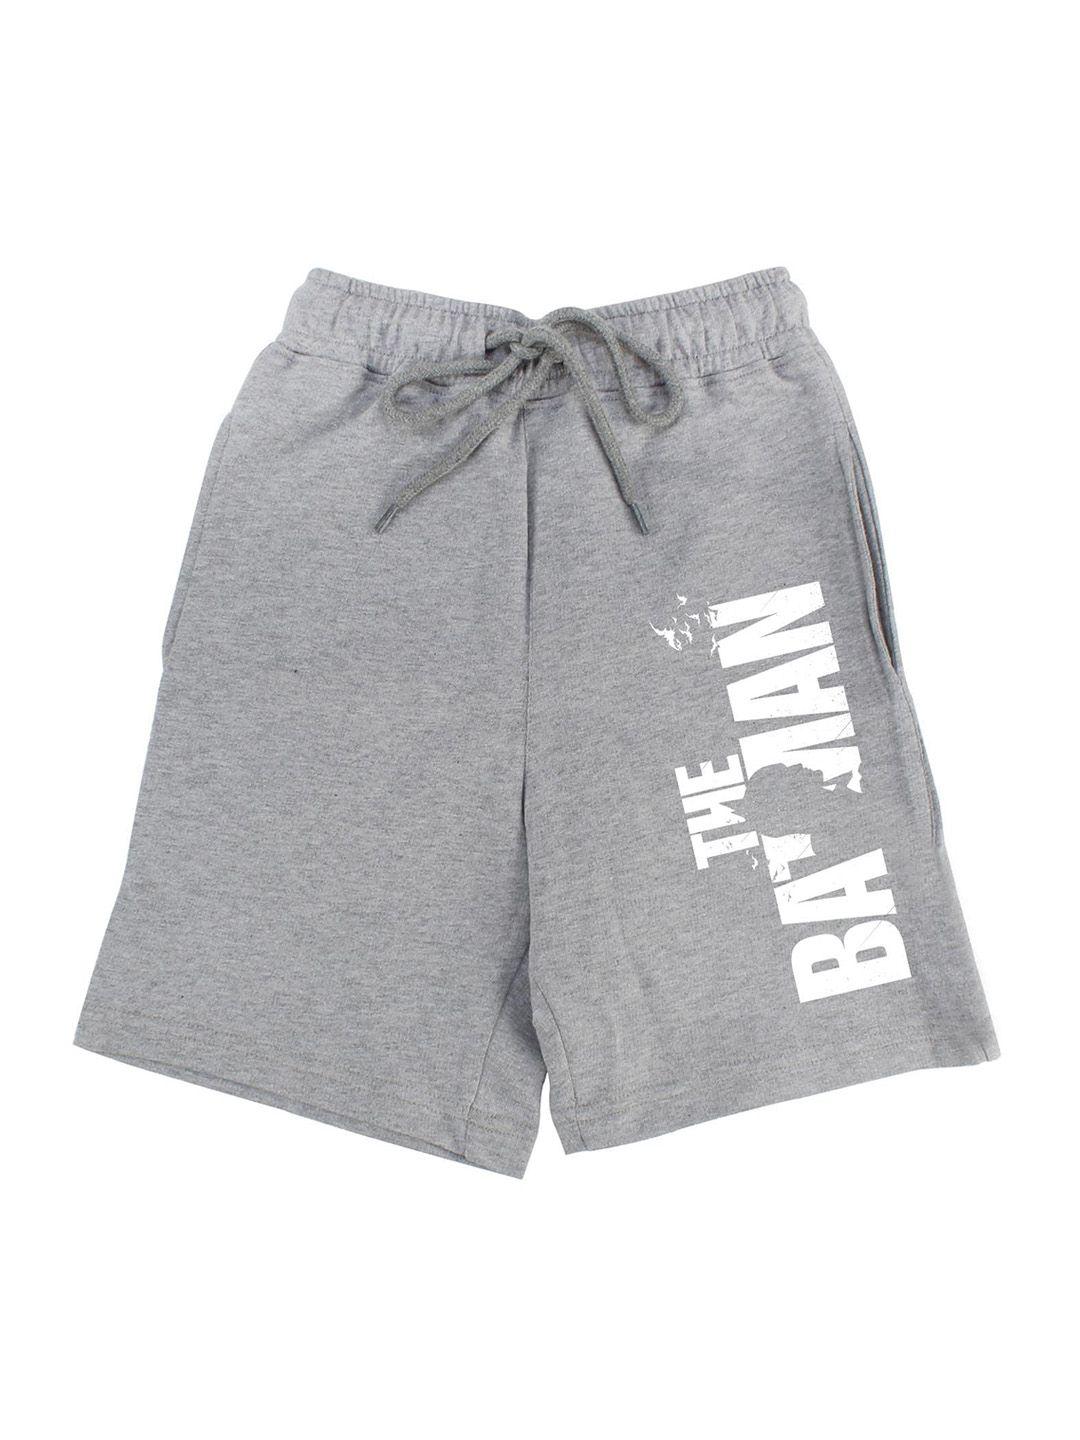 dc-by-wear-your-mind-boys-grey-typography-printed-batman-shorts